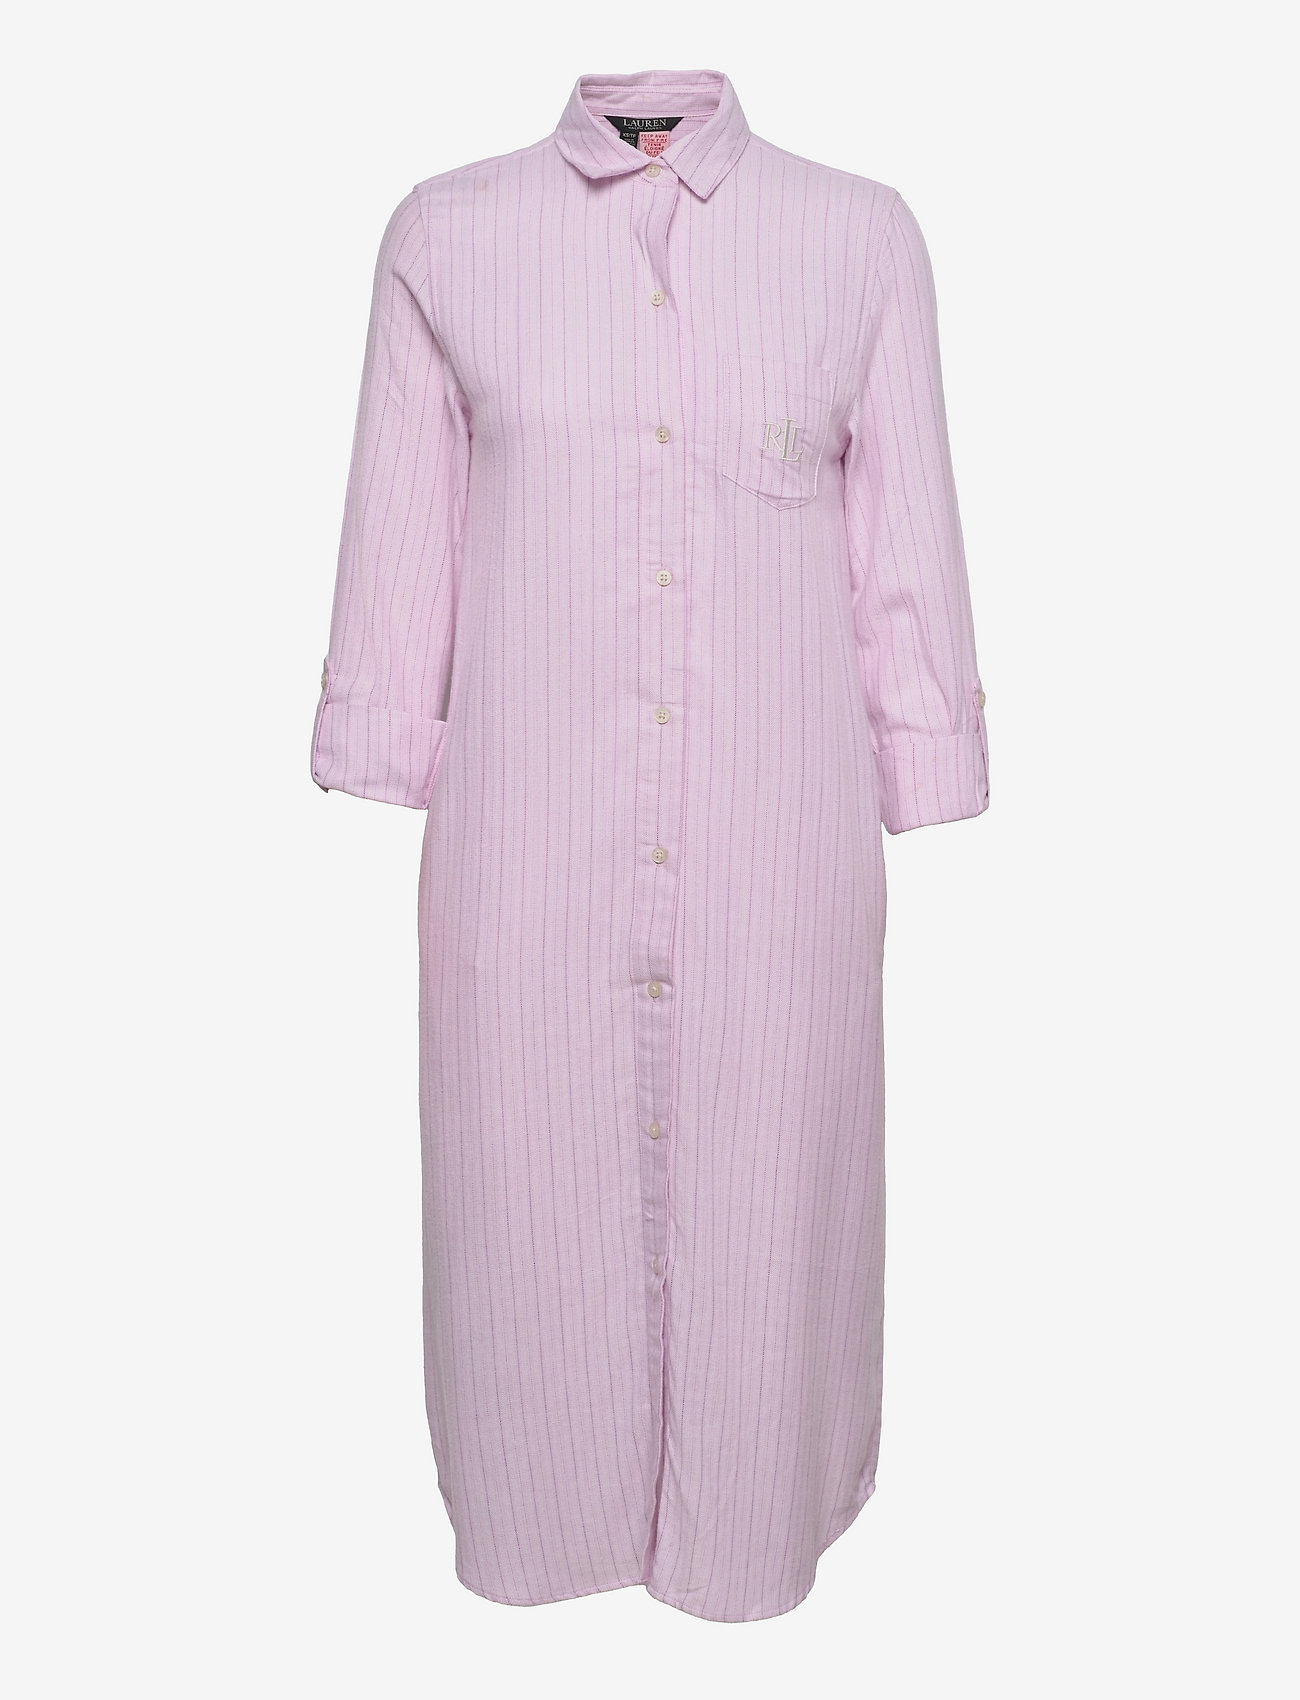 Lauren Ralph Lauren Homewear - LRL L/S ROLL TAB HIS SHIRT BALLET SLEEPS GREY PLAID - Överdelar - pink stripe - 0